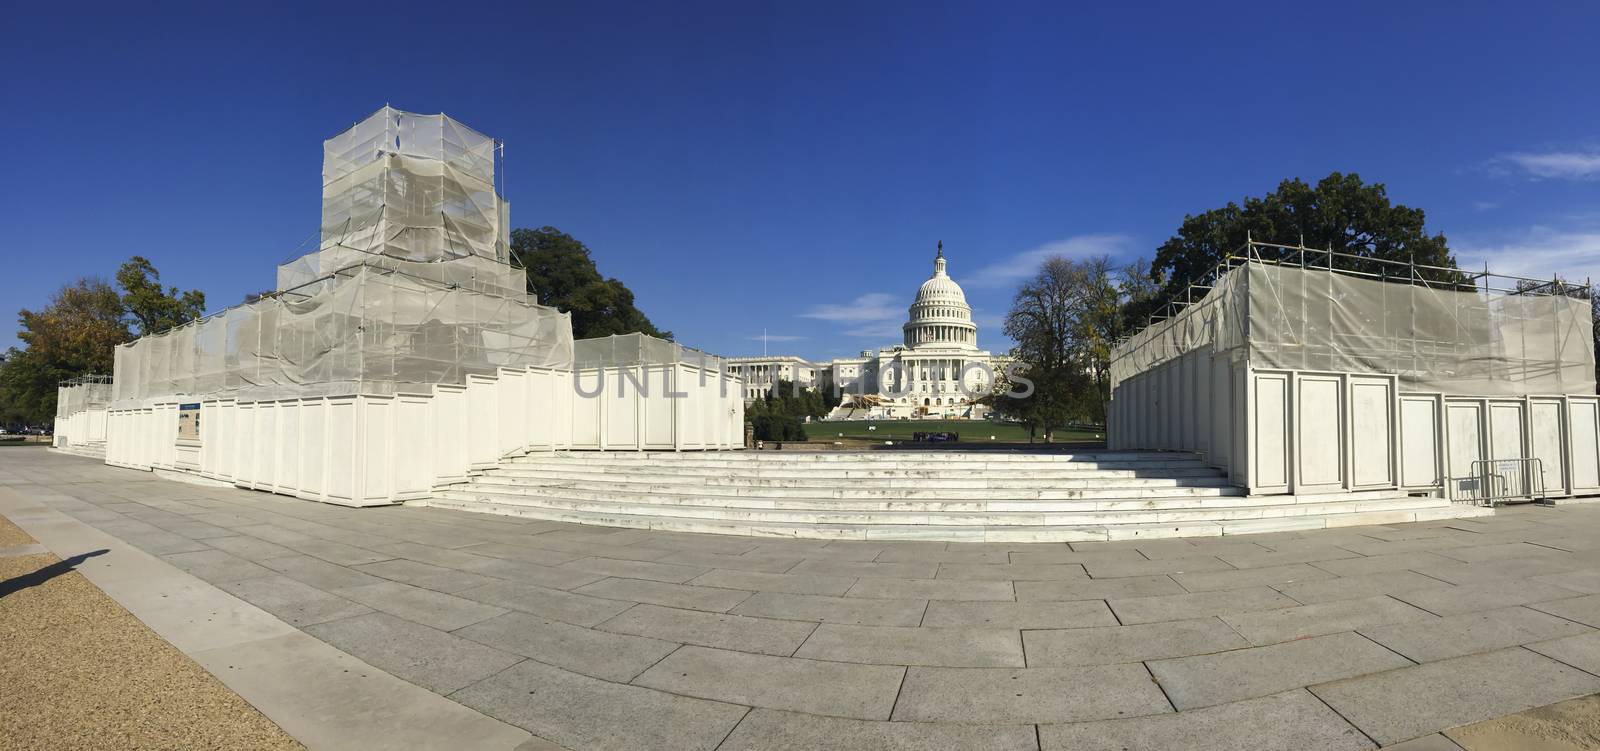 Capitol hill, Washington, DC by rarrarorro